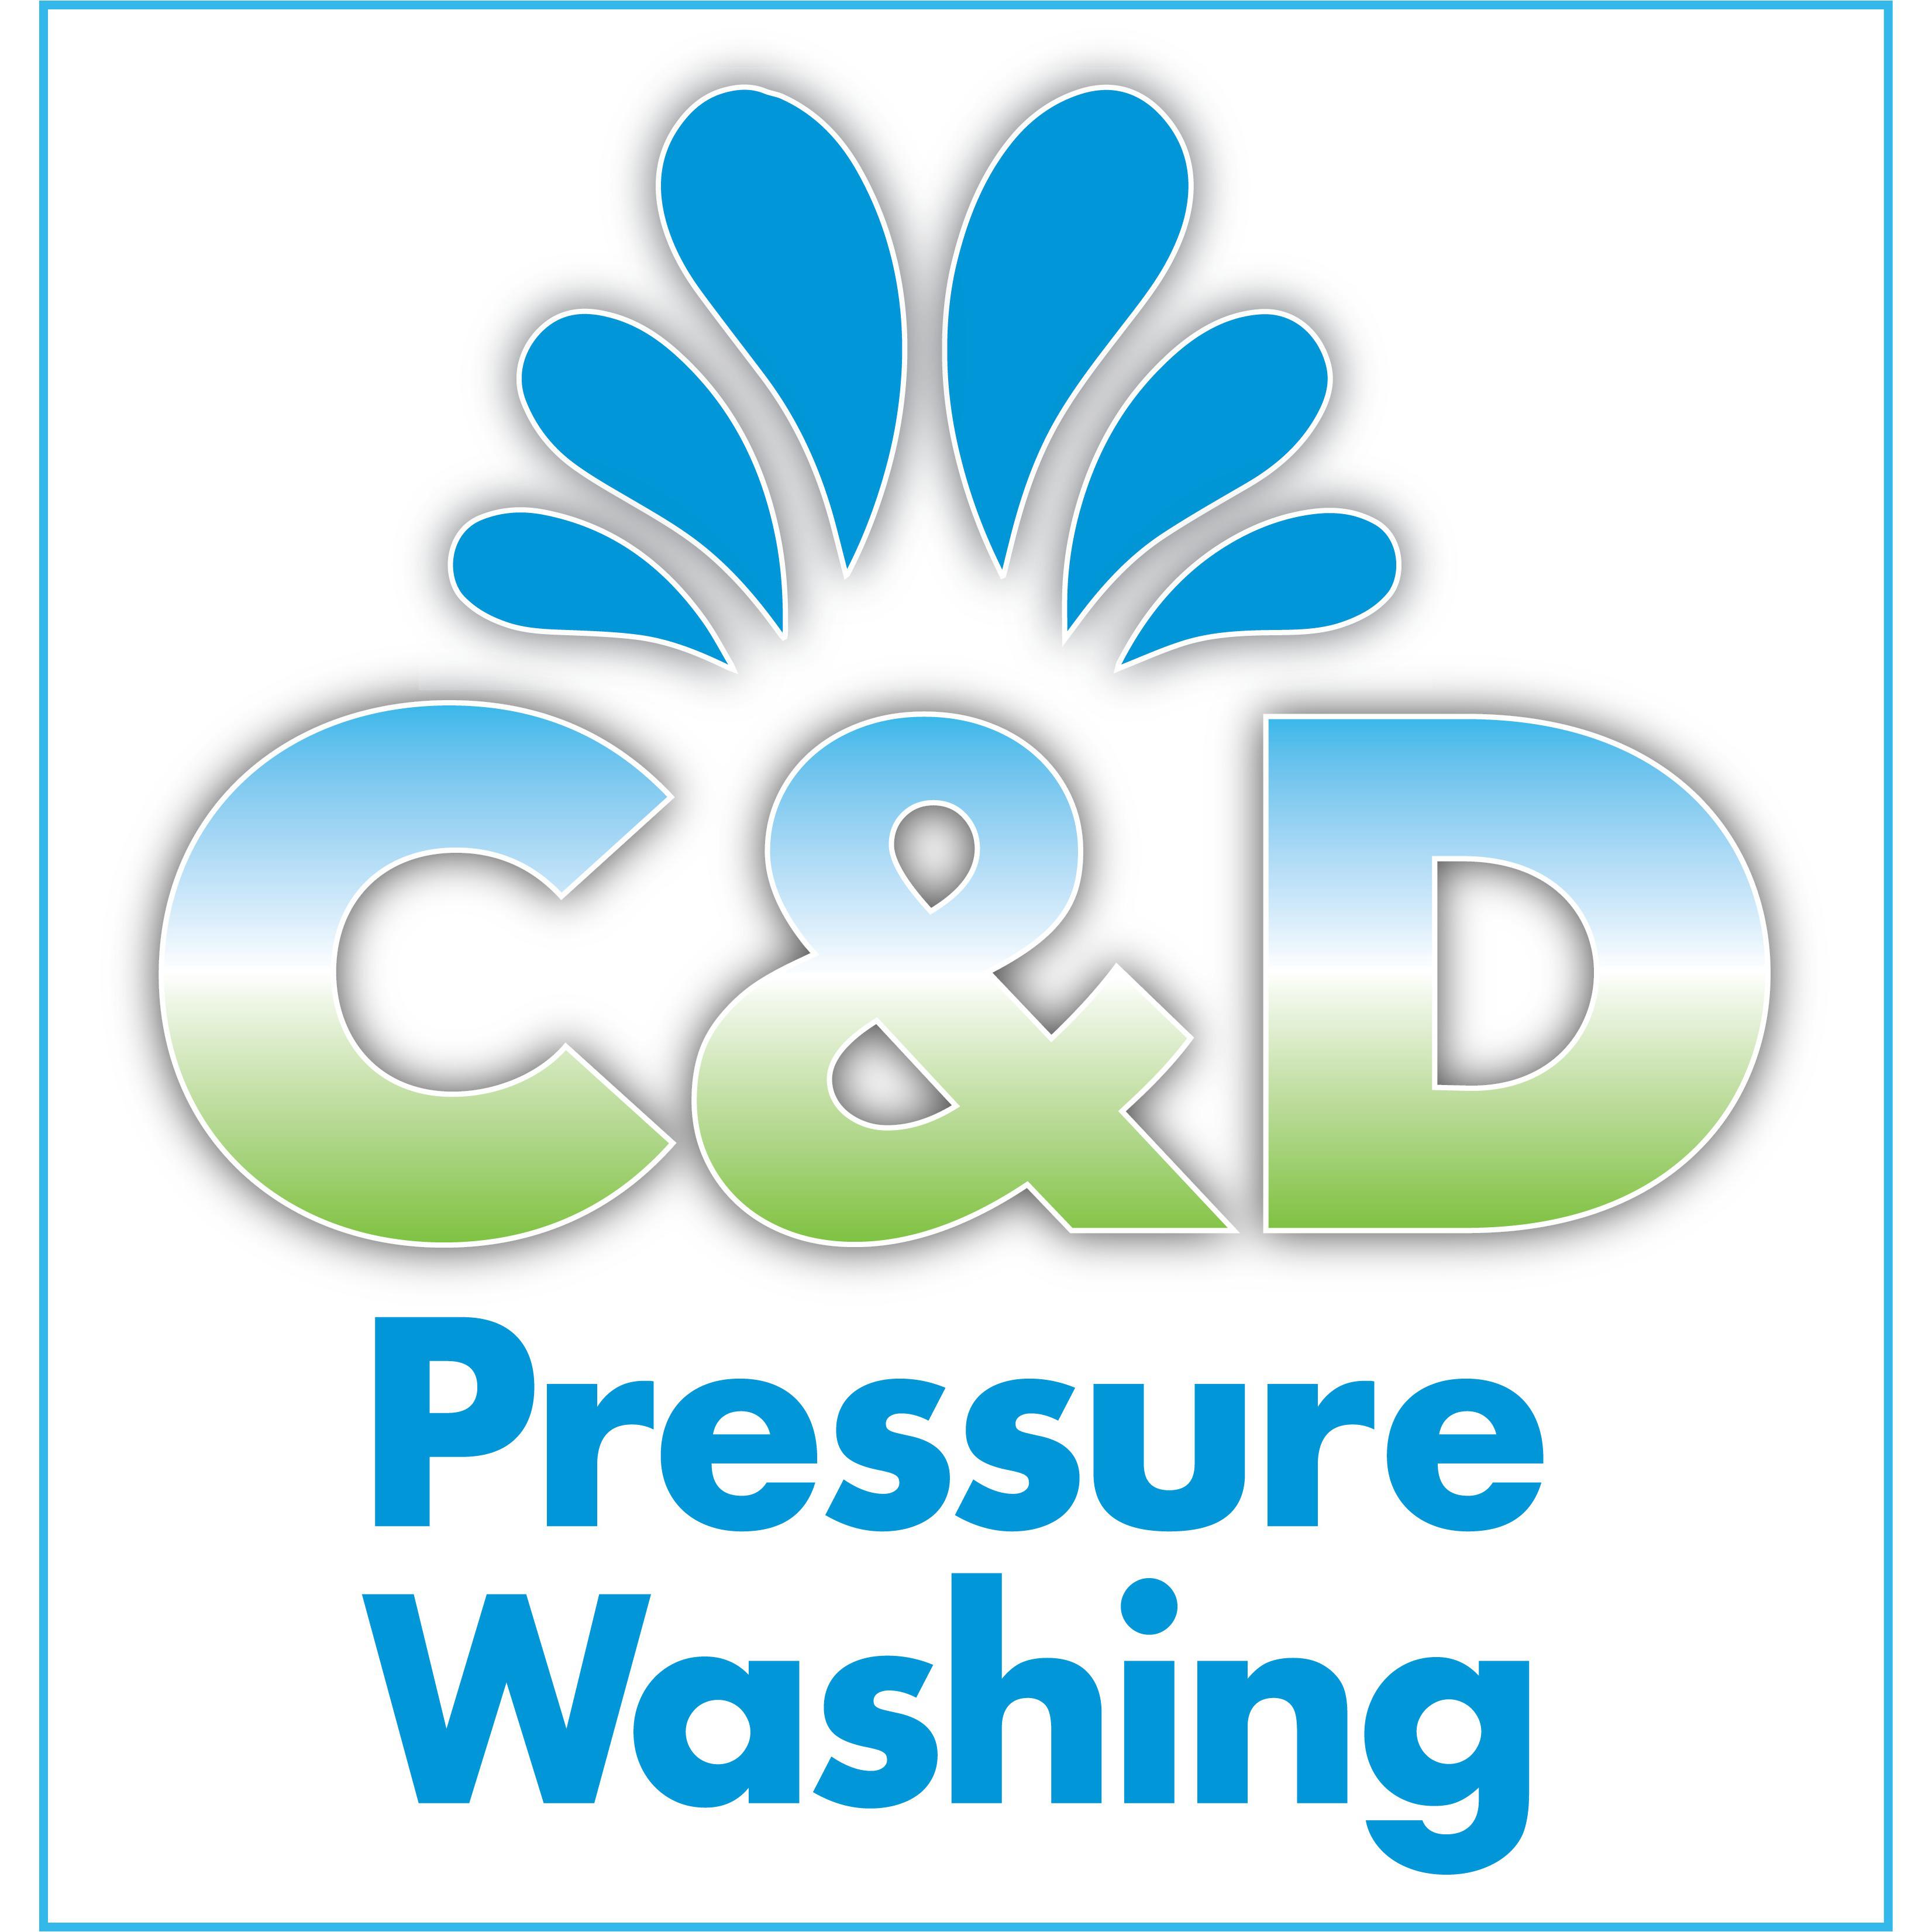 C & D Pressure Washing - Savannah, GA - (912)224-9217 | ShowMeLocal.com